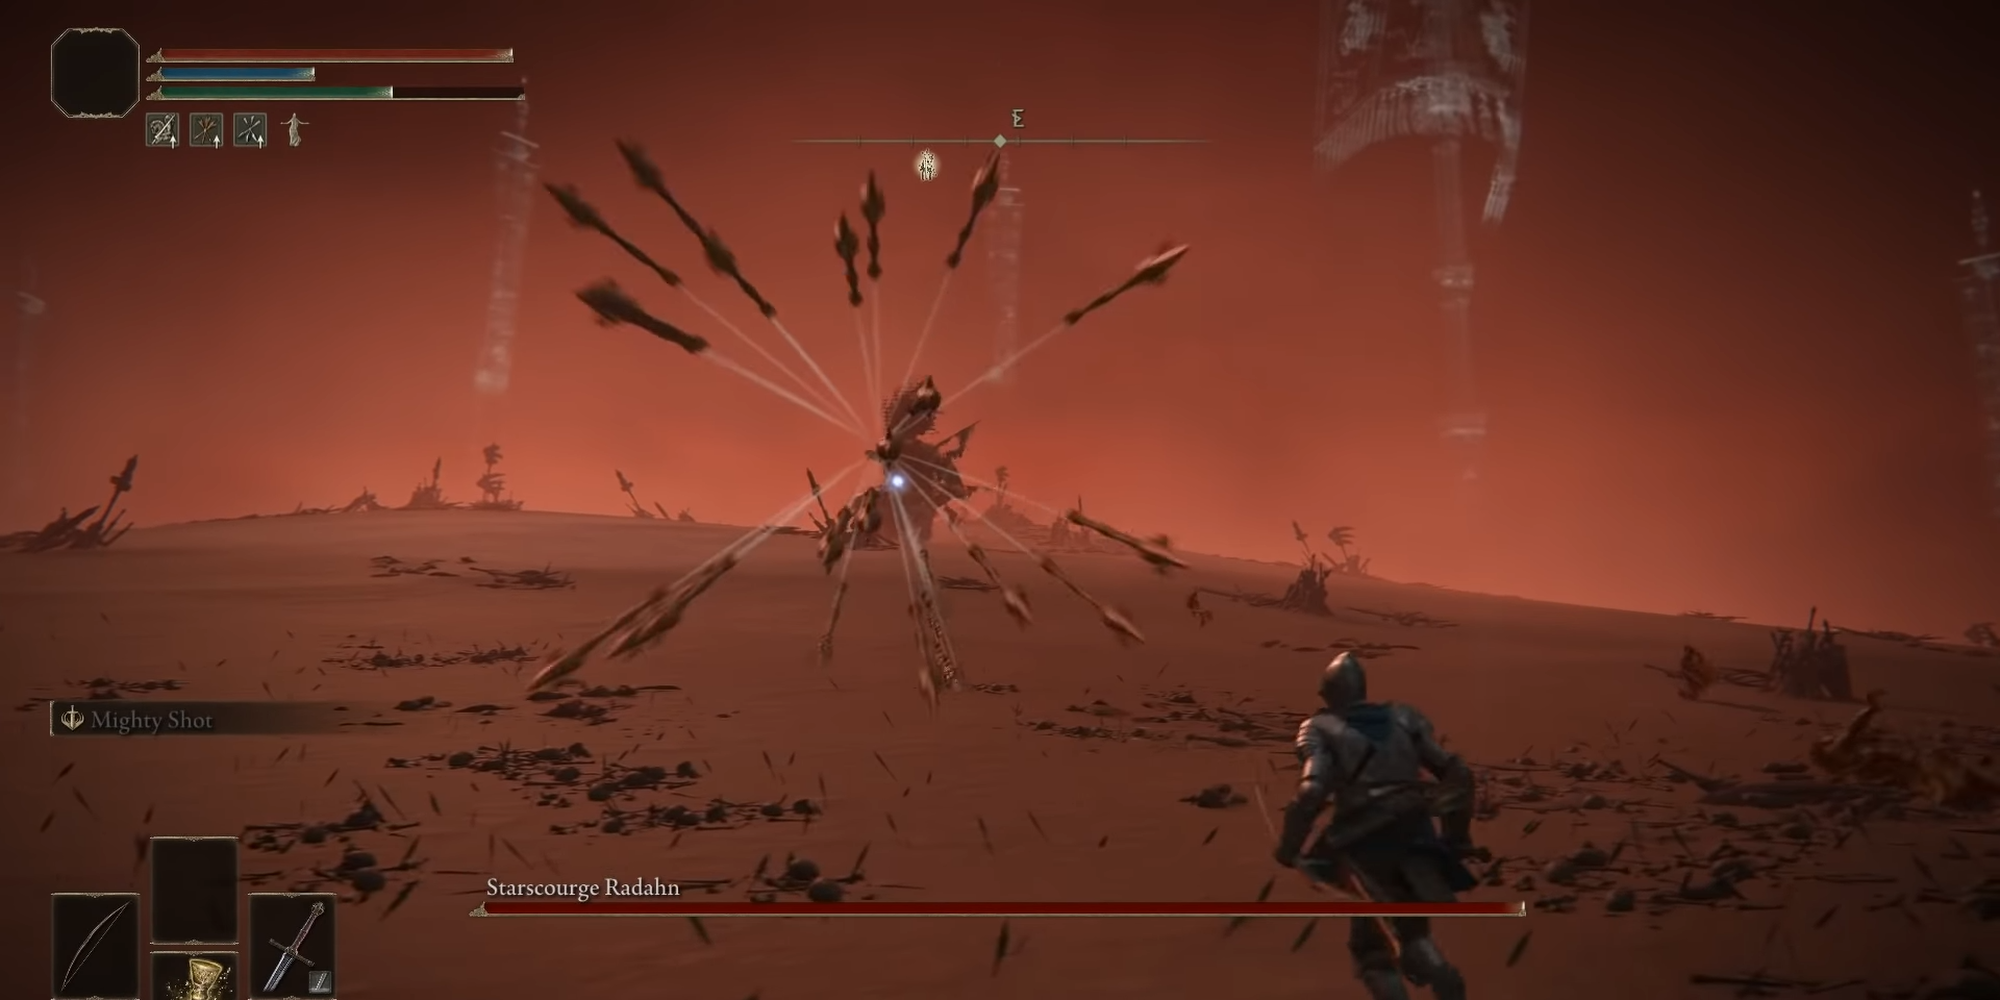 This image shows Starscourge Radahn using his Arrow Blast attack in Elden Ring.